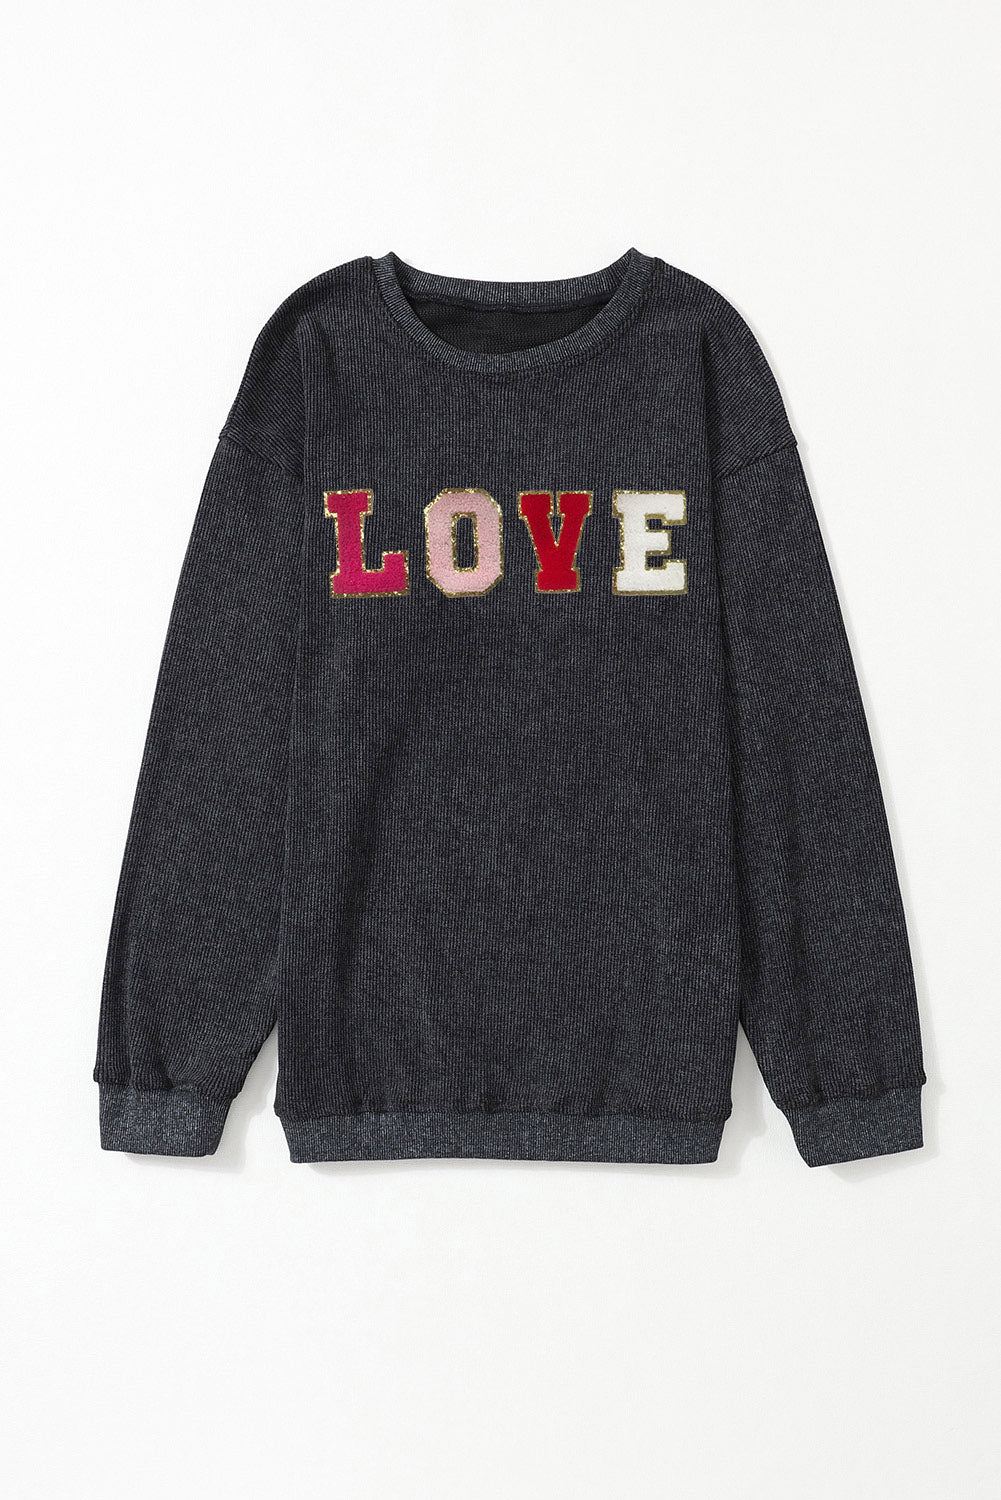 Black Glitter LOVE Letter Graphic Corded Baggy Sweatshirt Graphic Sweatshirts JT's Designer Fashion